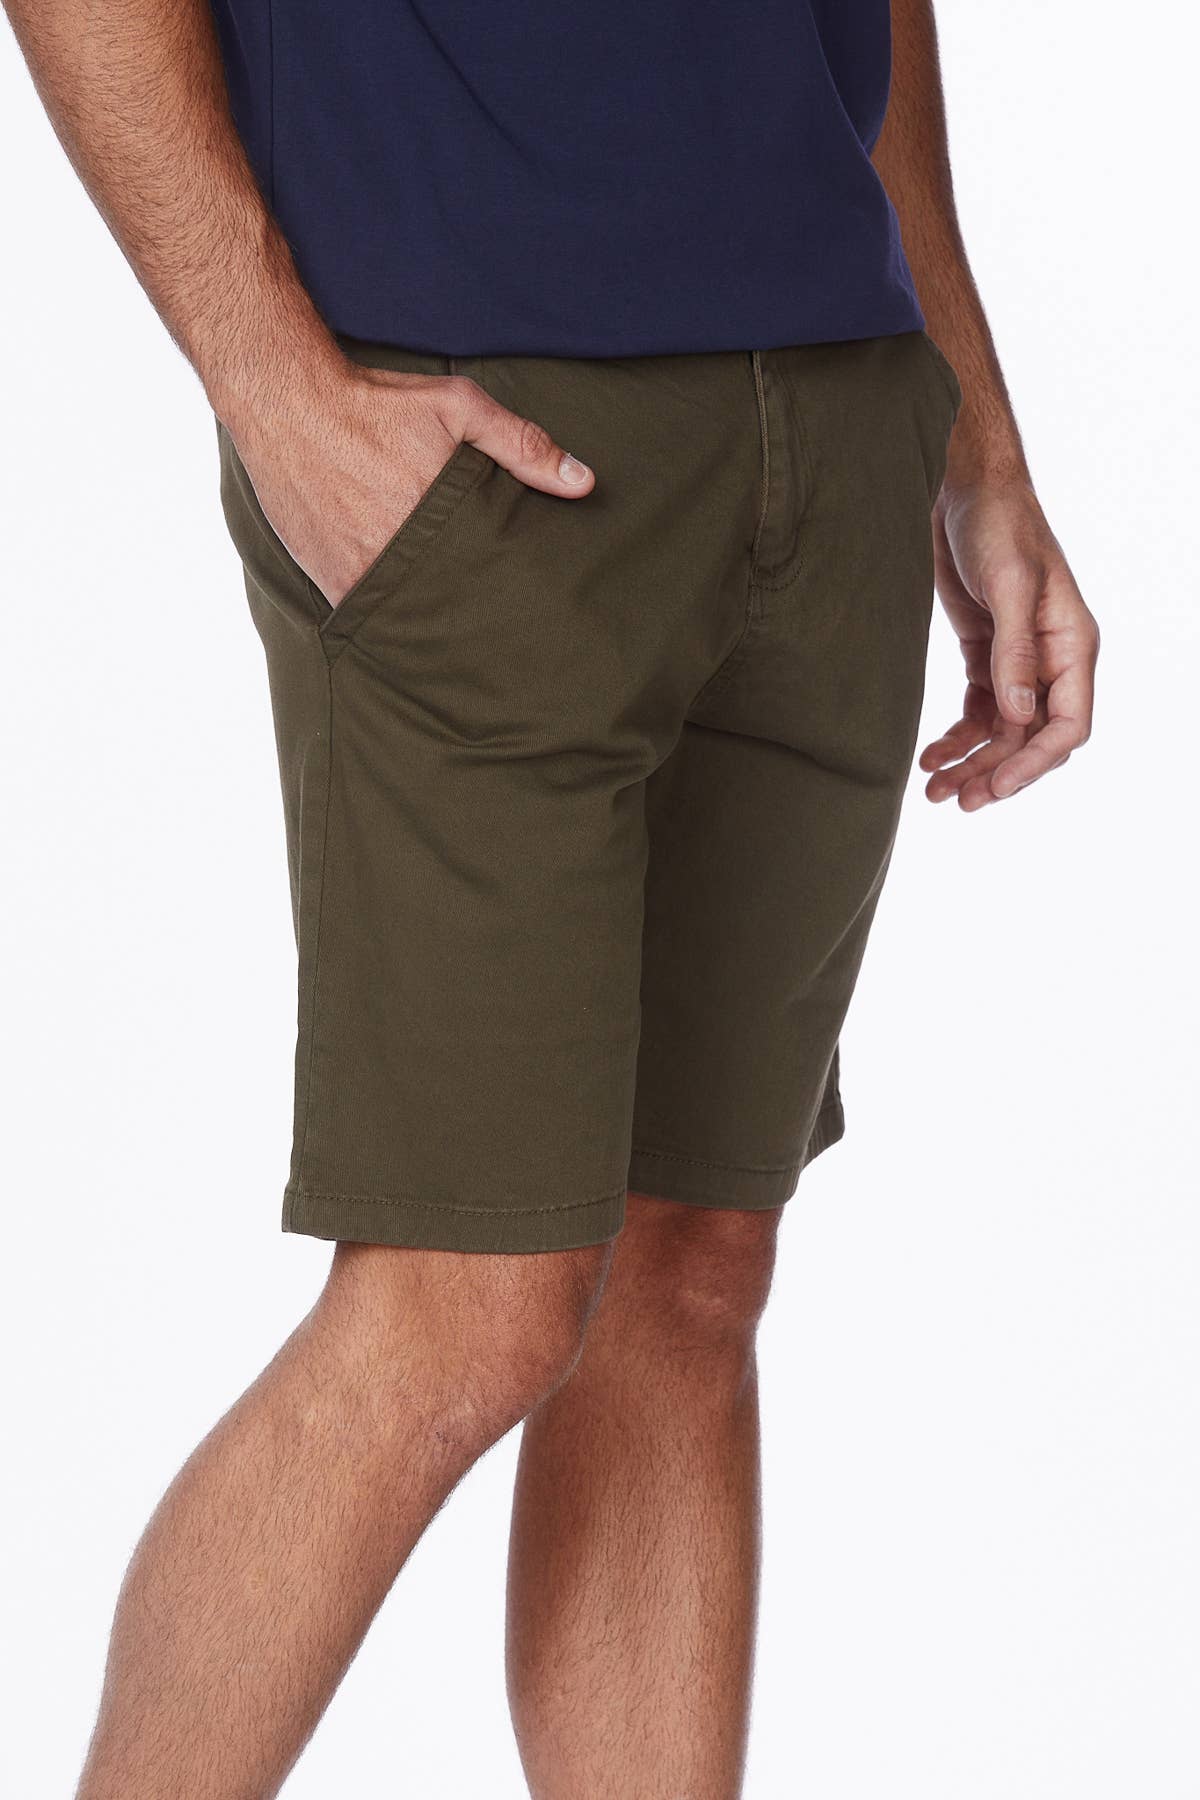 Men's Twill Summer Stretch 4 Pocket Chino Shorts - Olive - Vault Board Shop Hawk's Bay